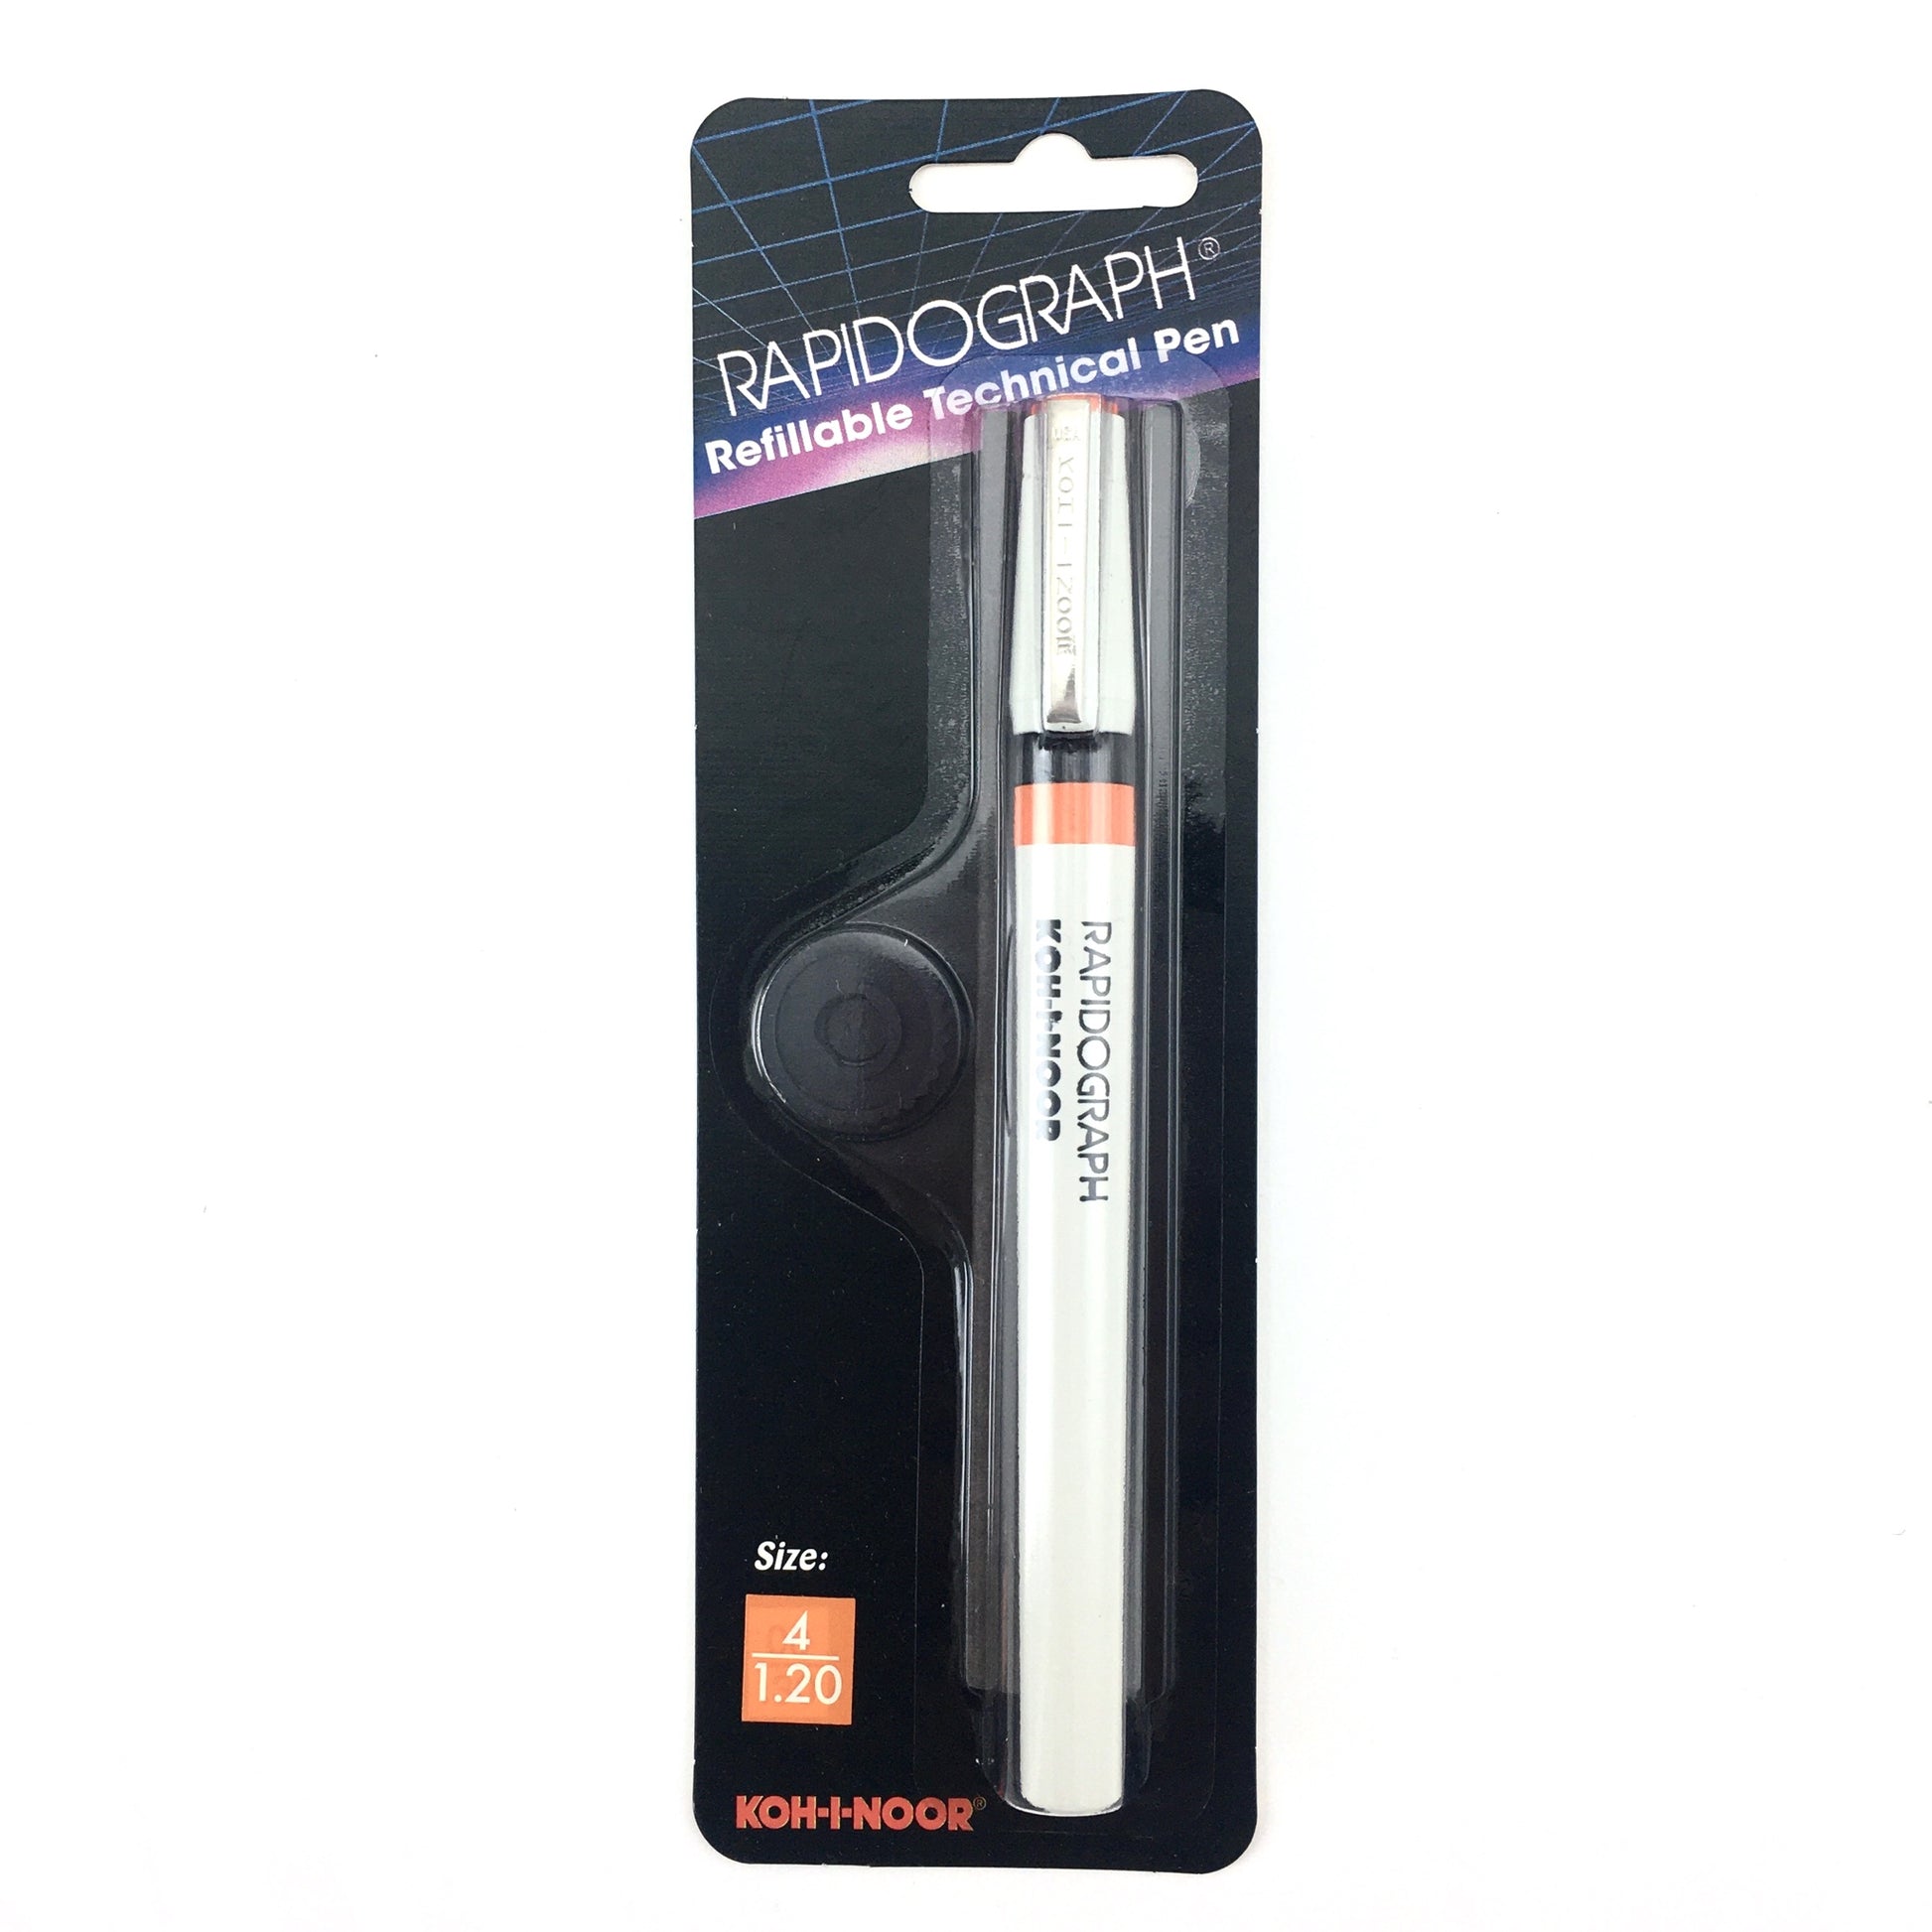 Koh-I-Noor Rapidograph Refillable Technical Pen - 4 (1.20mm) by Koh-I-Noor - K. A. Artist Shop